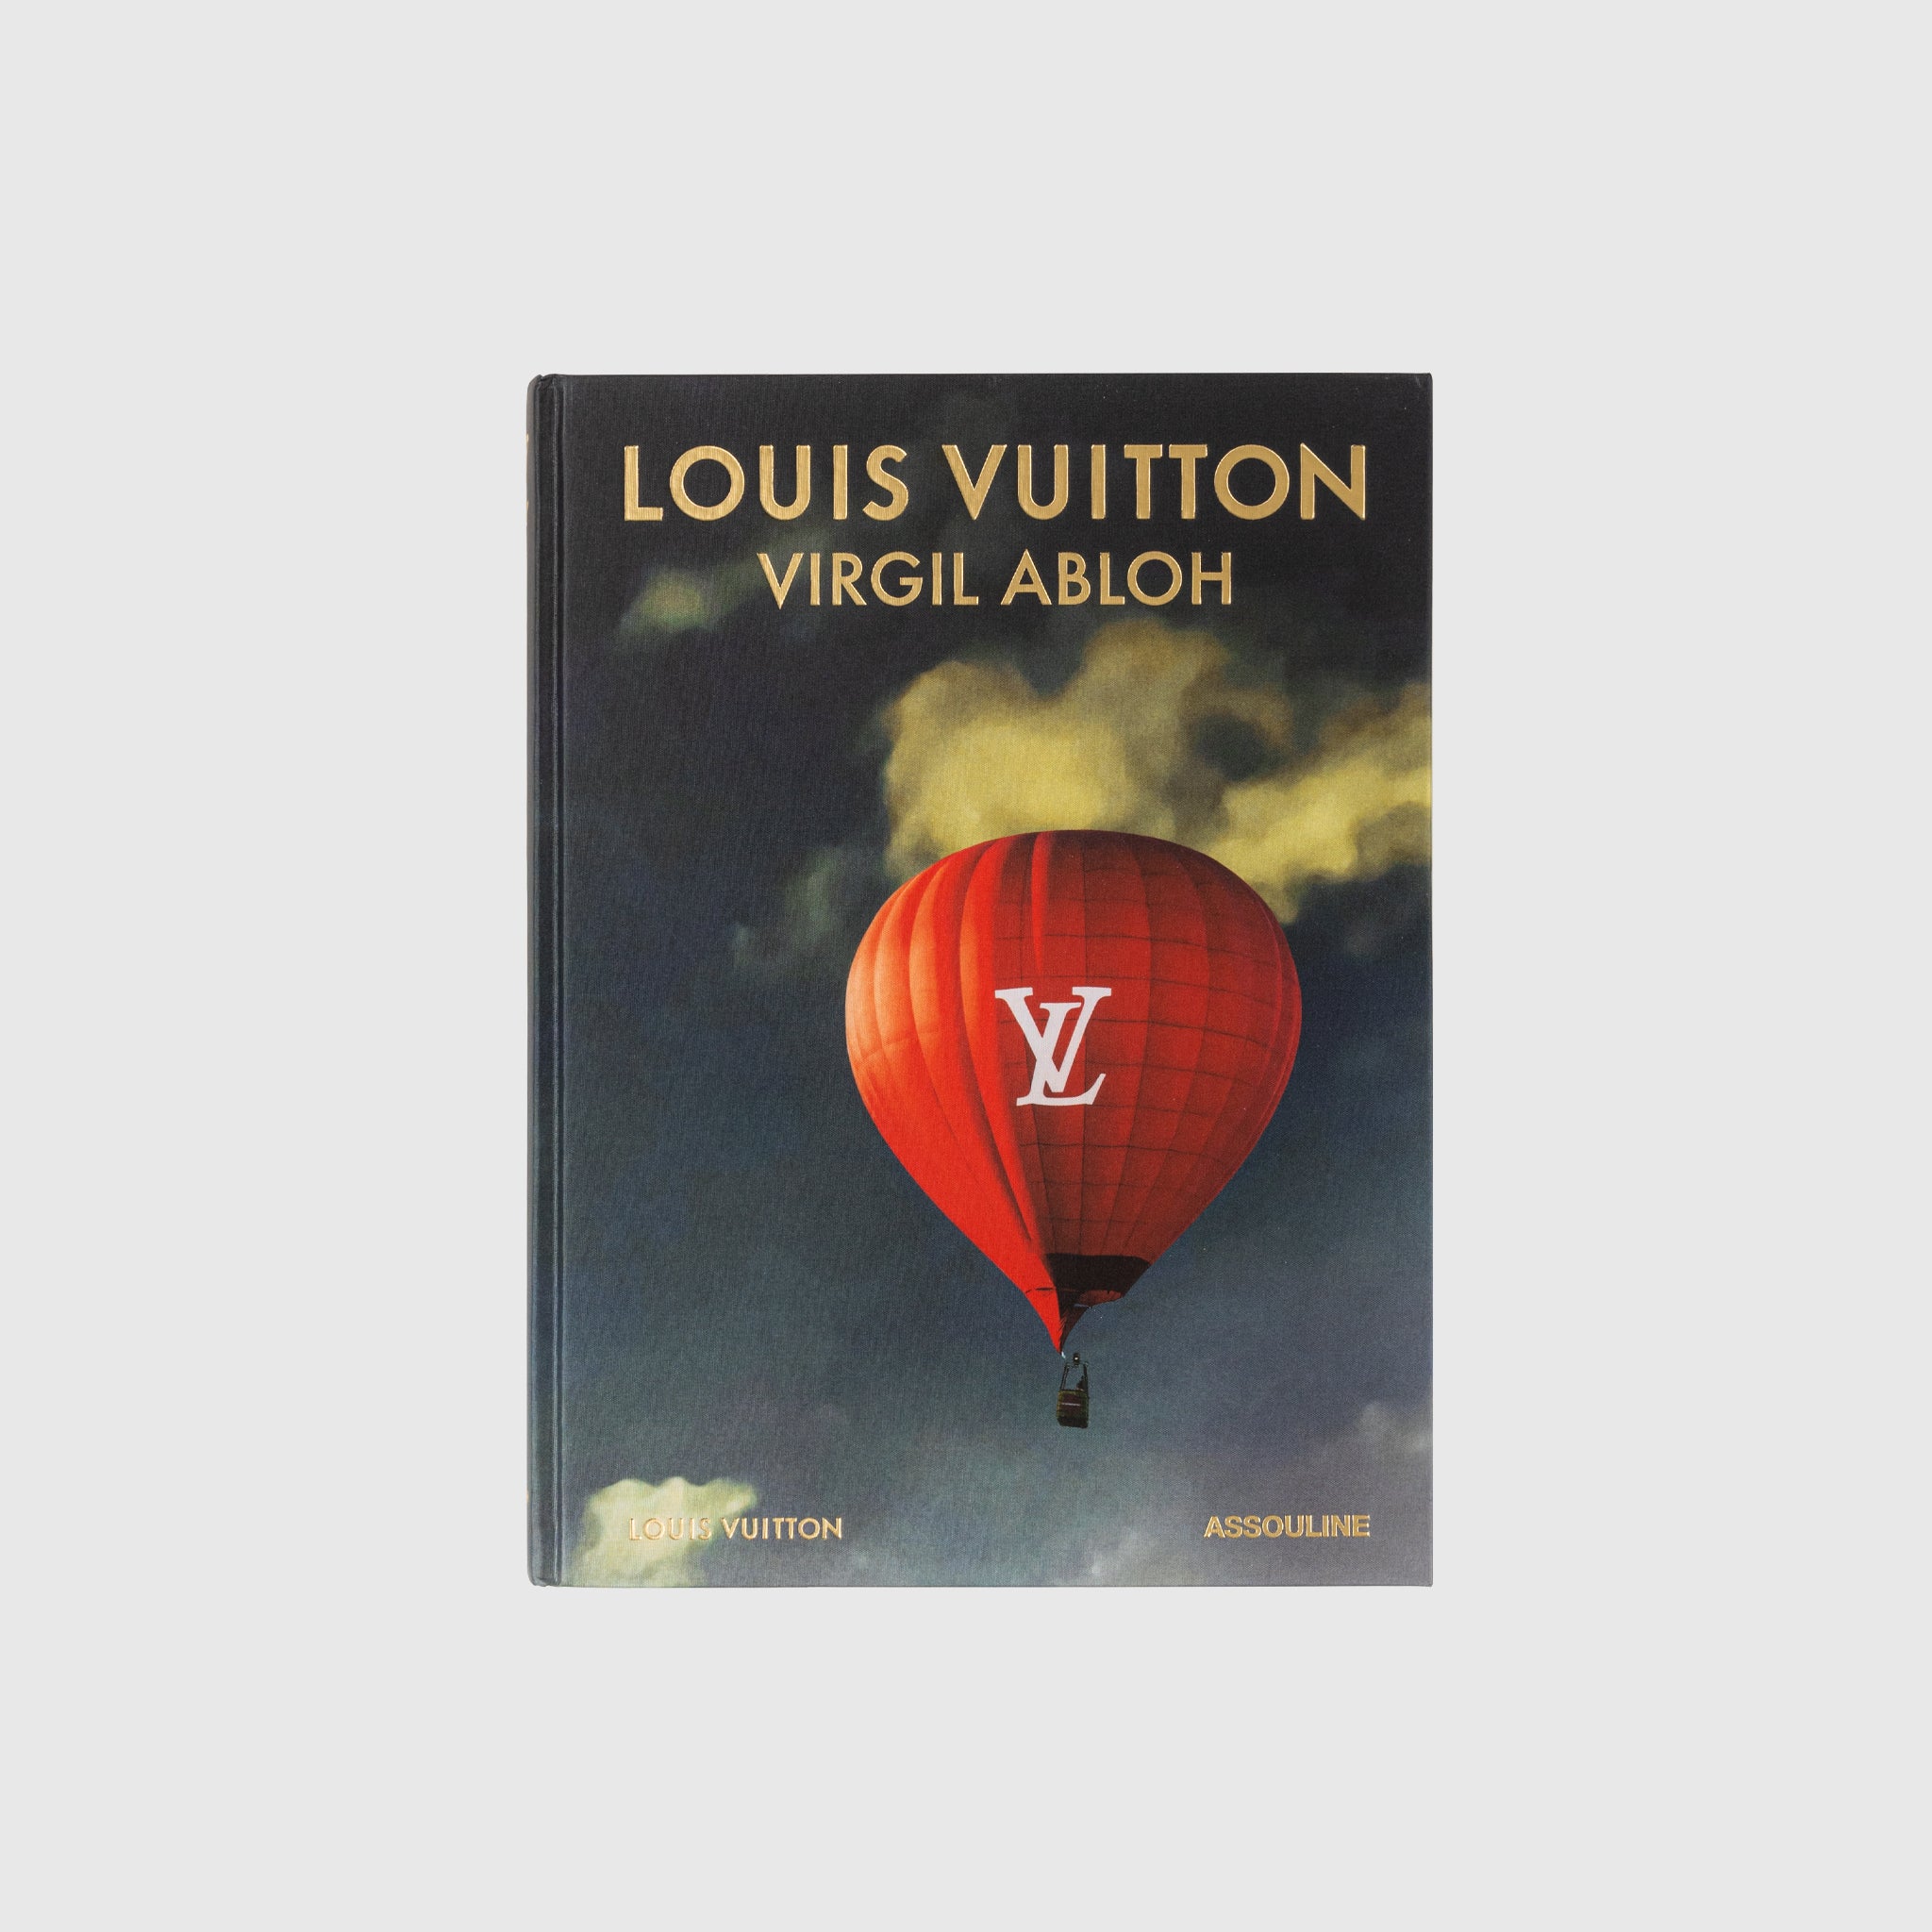 LOUIS VUITTON: VIRGIL ABLOH (BALLON COVER)